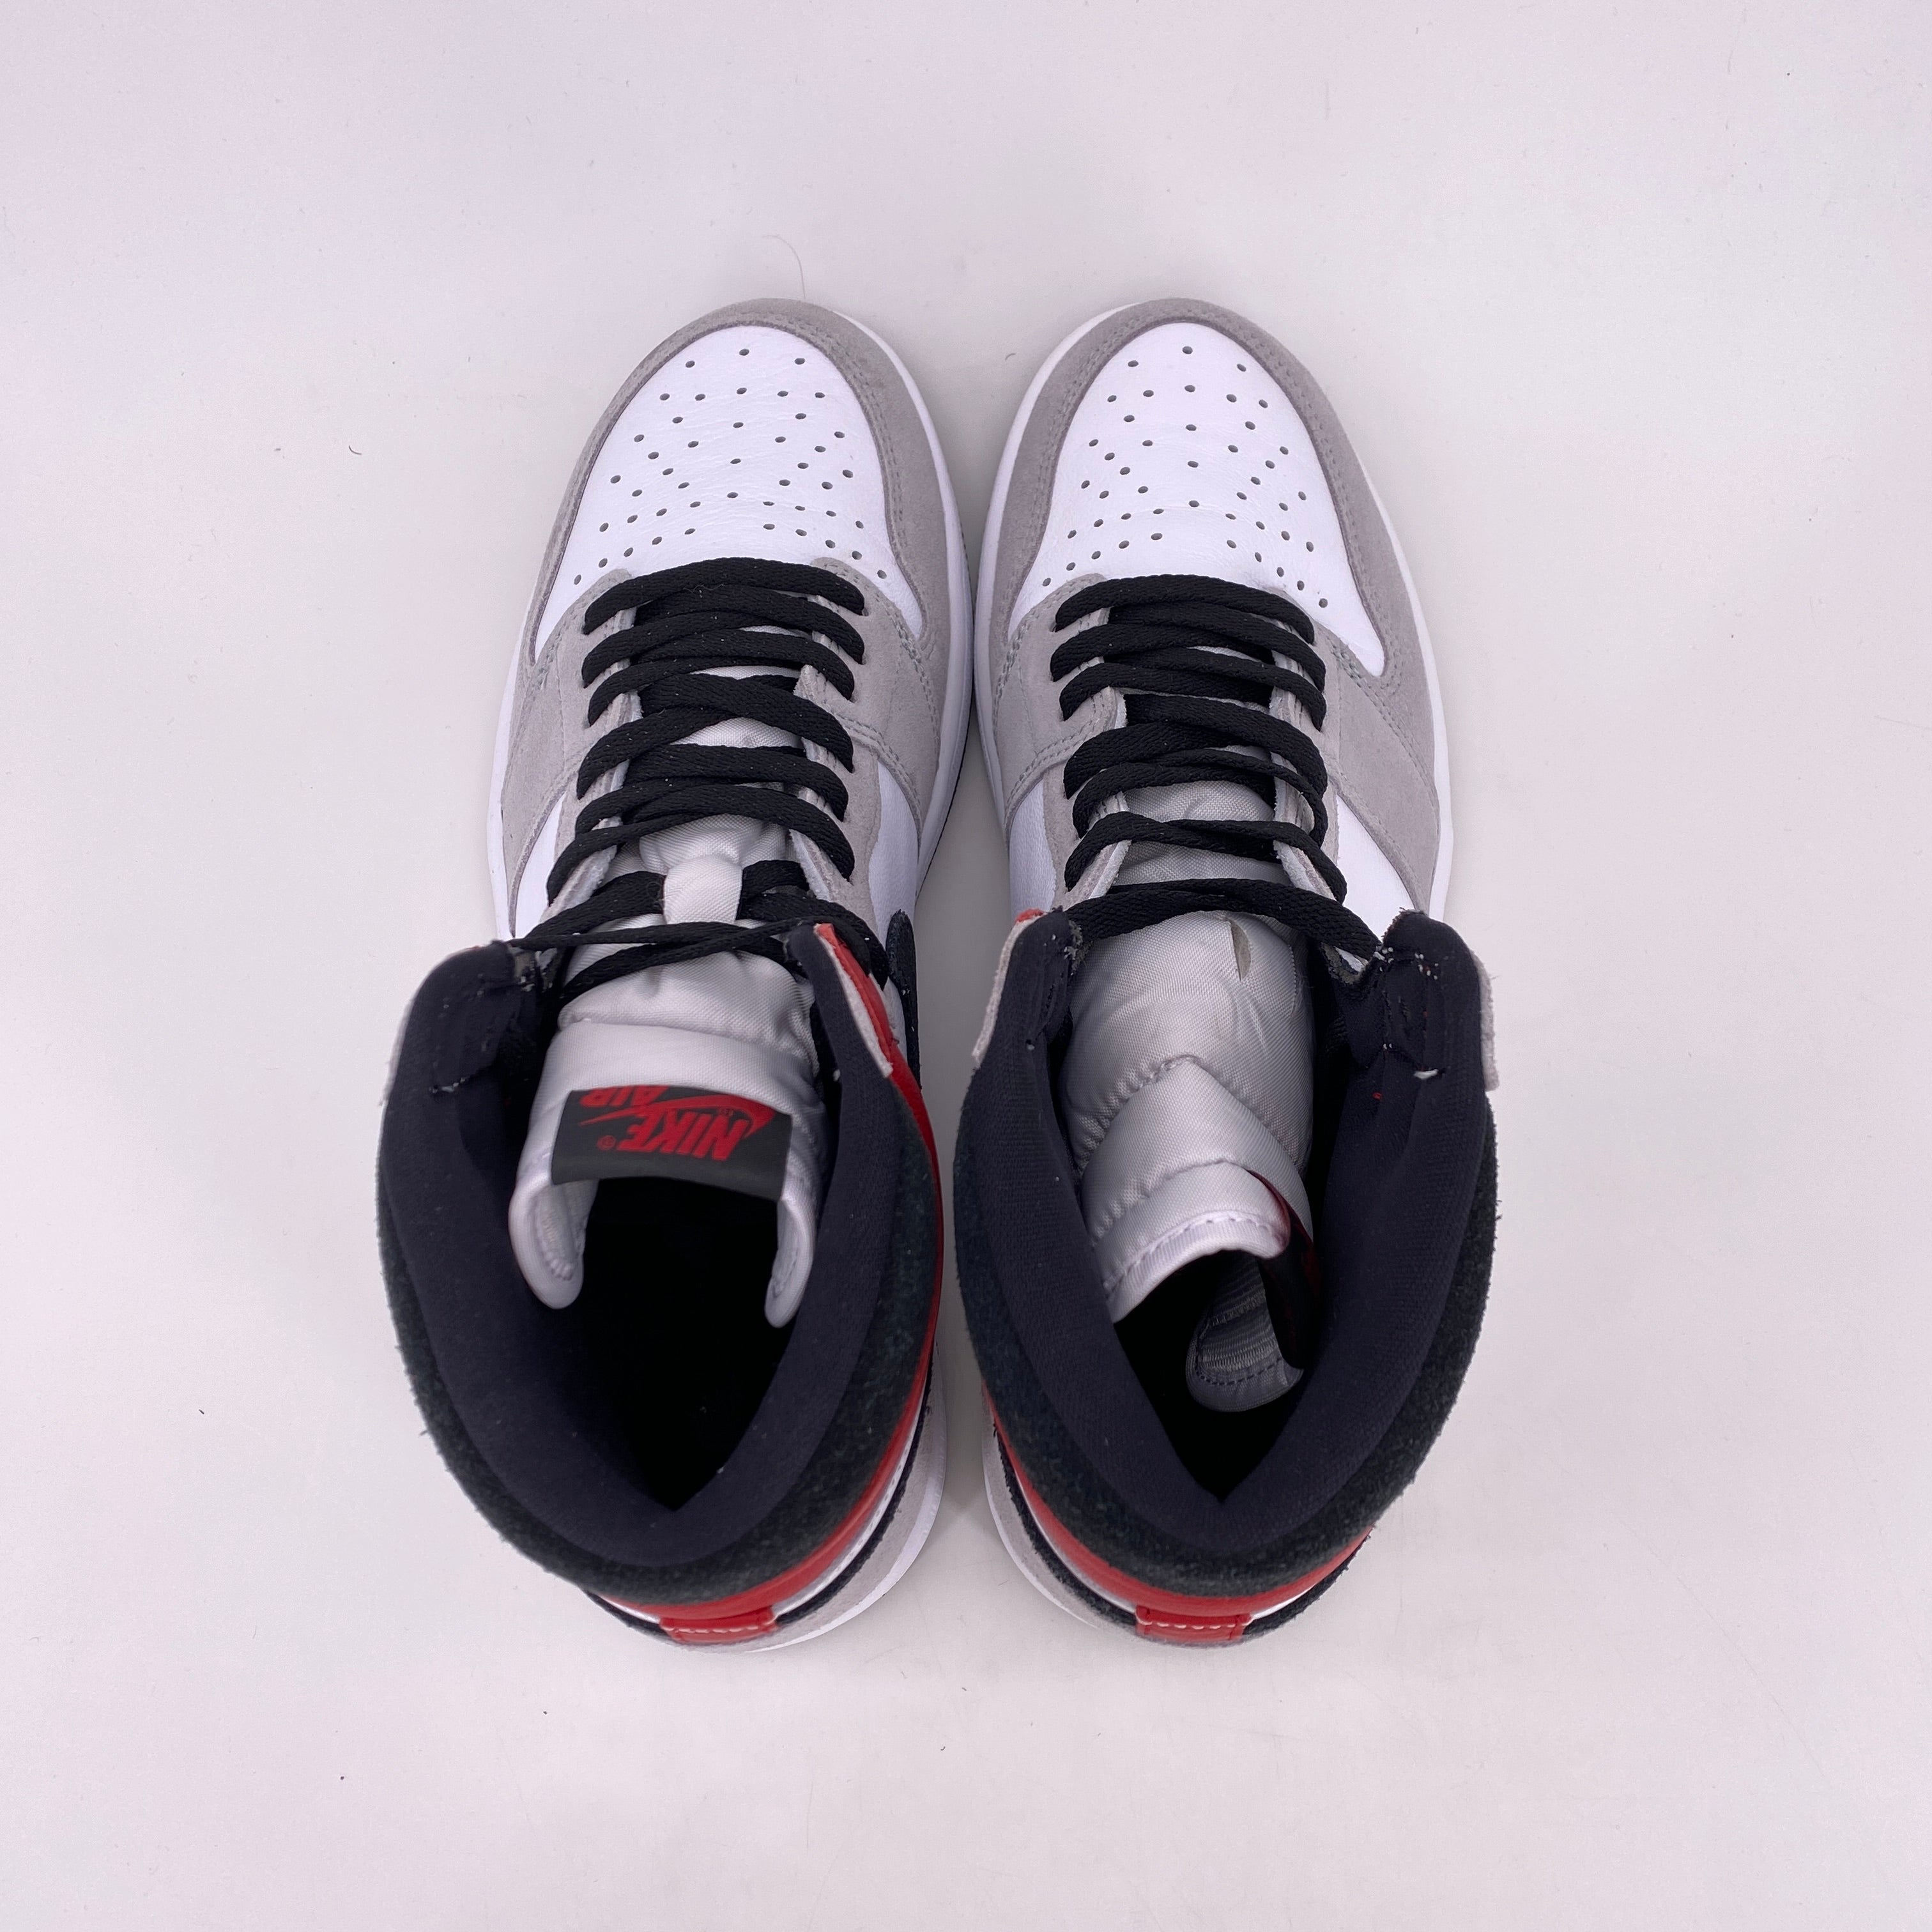 Air Jordan 1 Retro High OG "Smoke Grey" 2020 Used Size 11